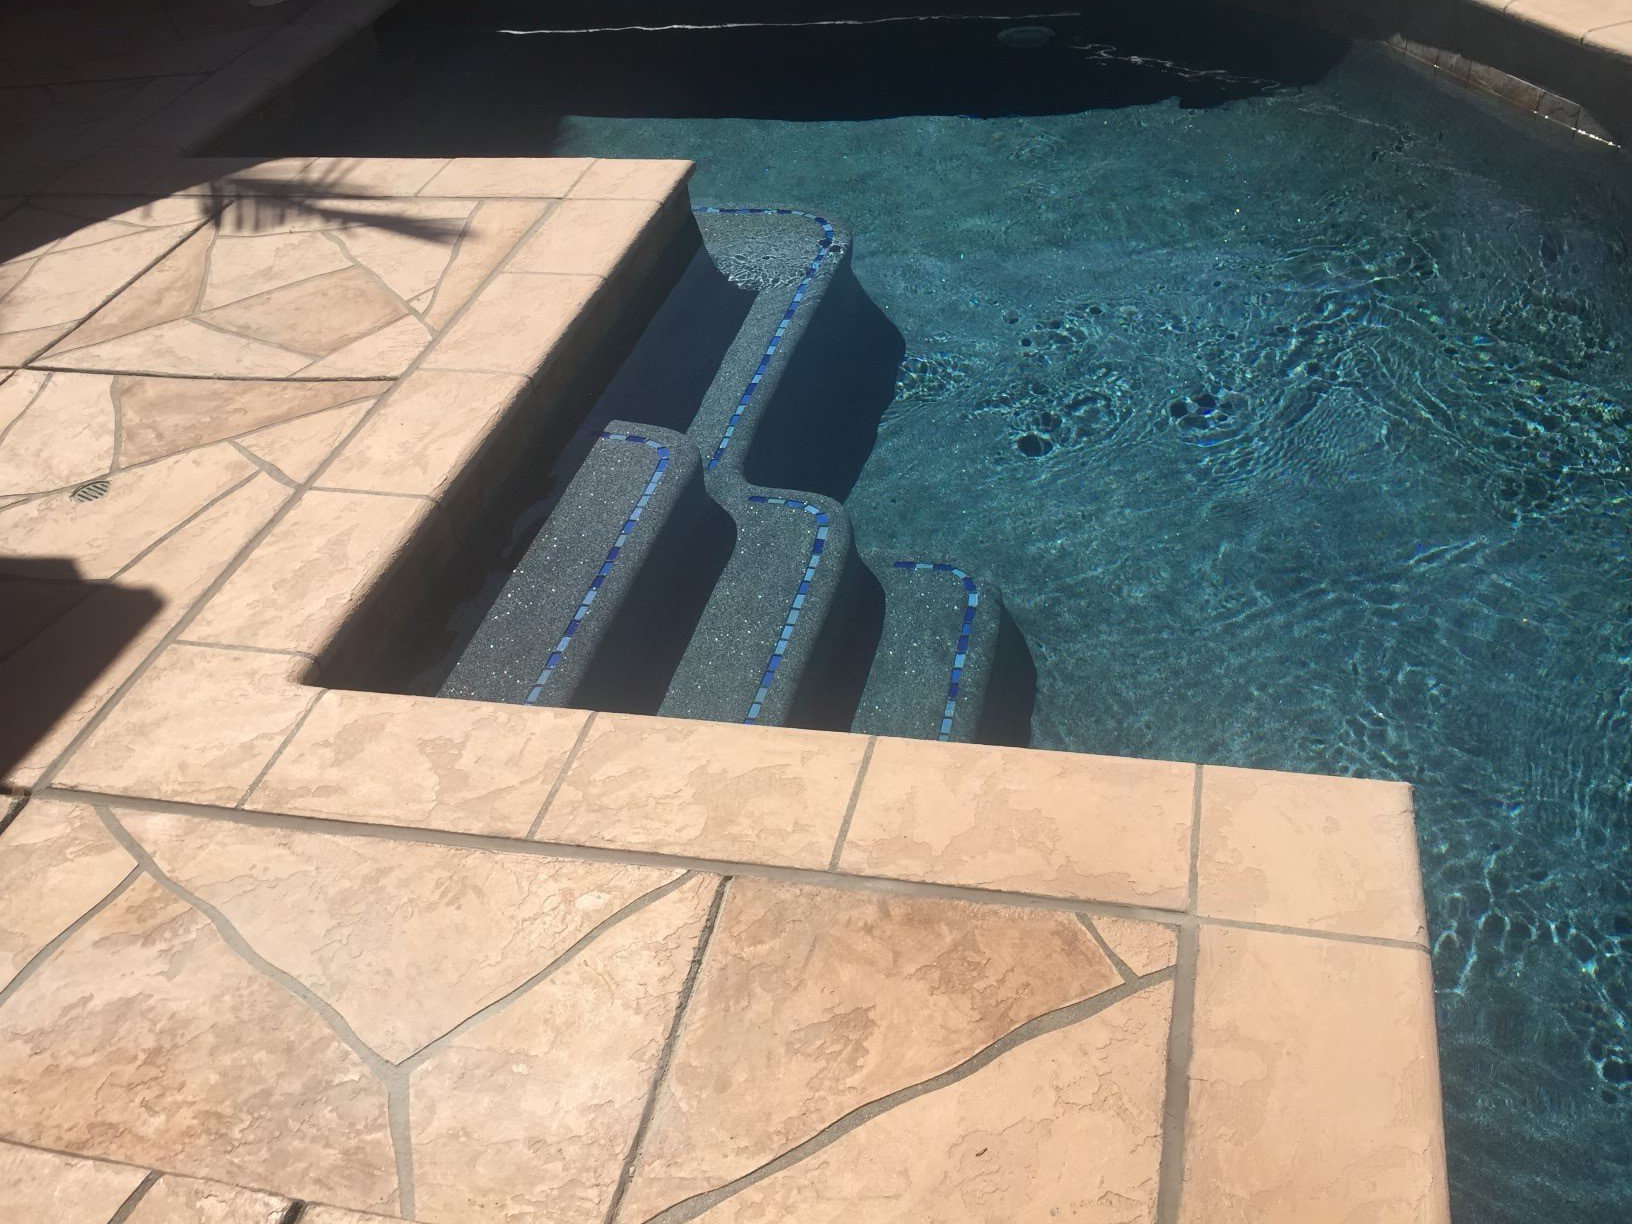 Pool Decking Construction – San Diego, CA – Berny's Pool Service LLC